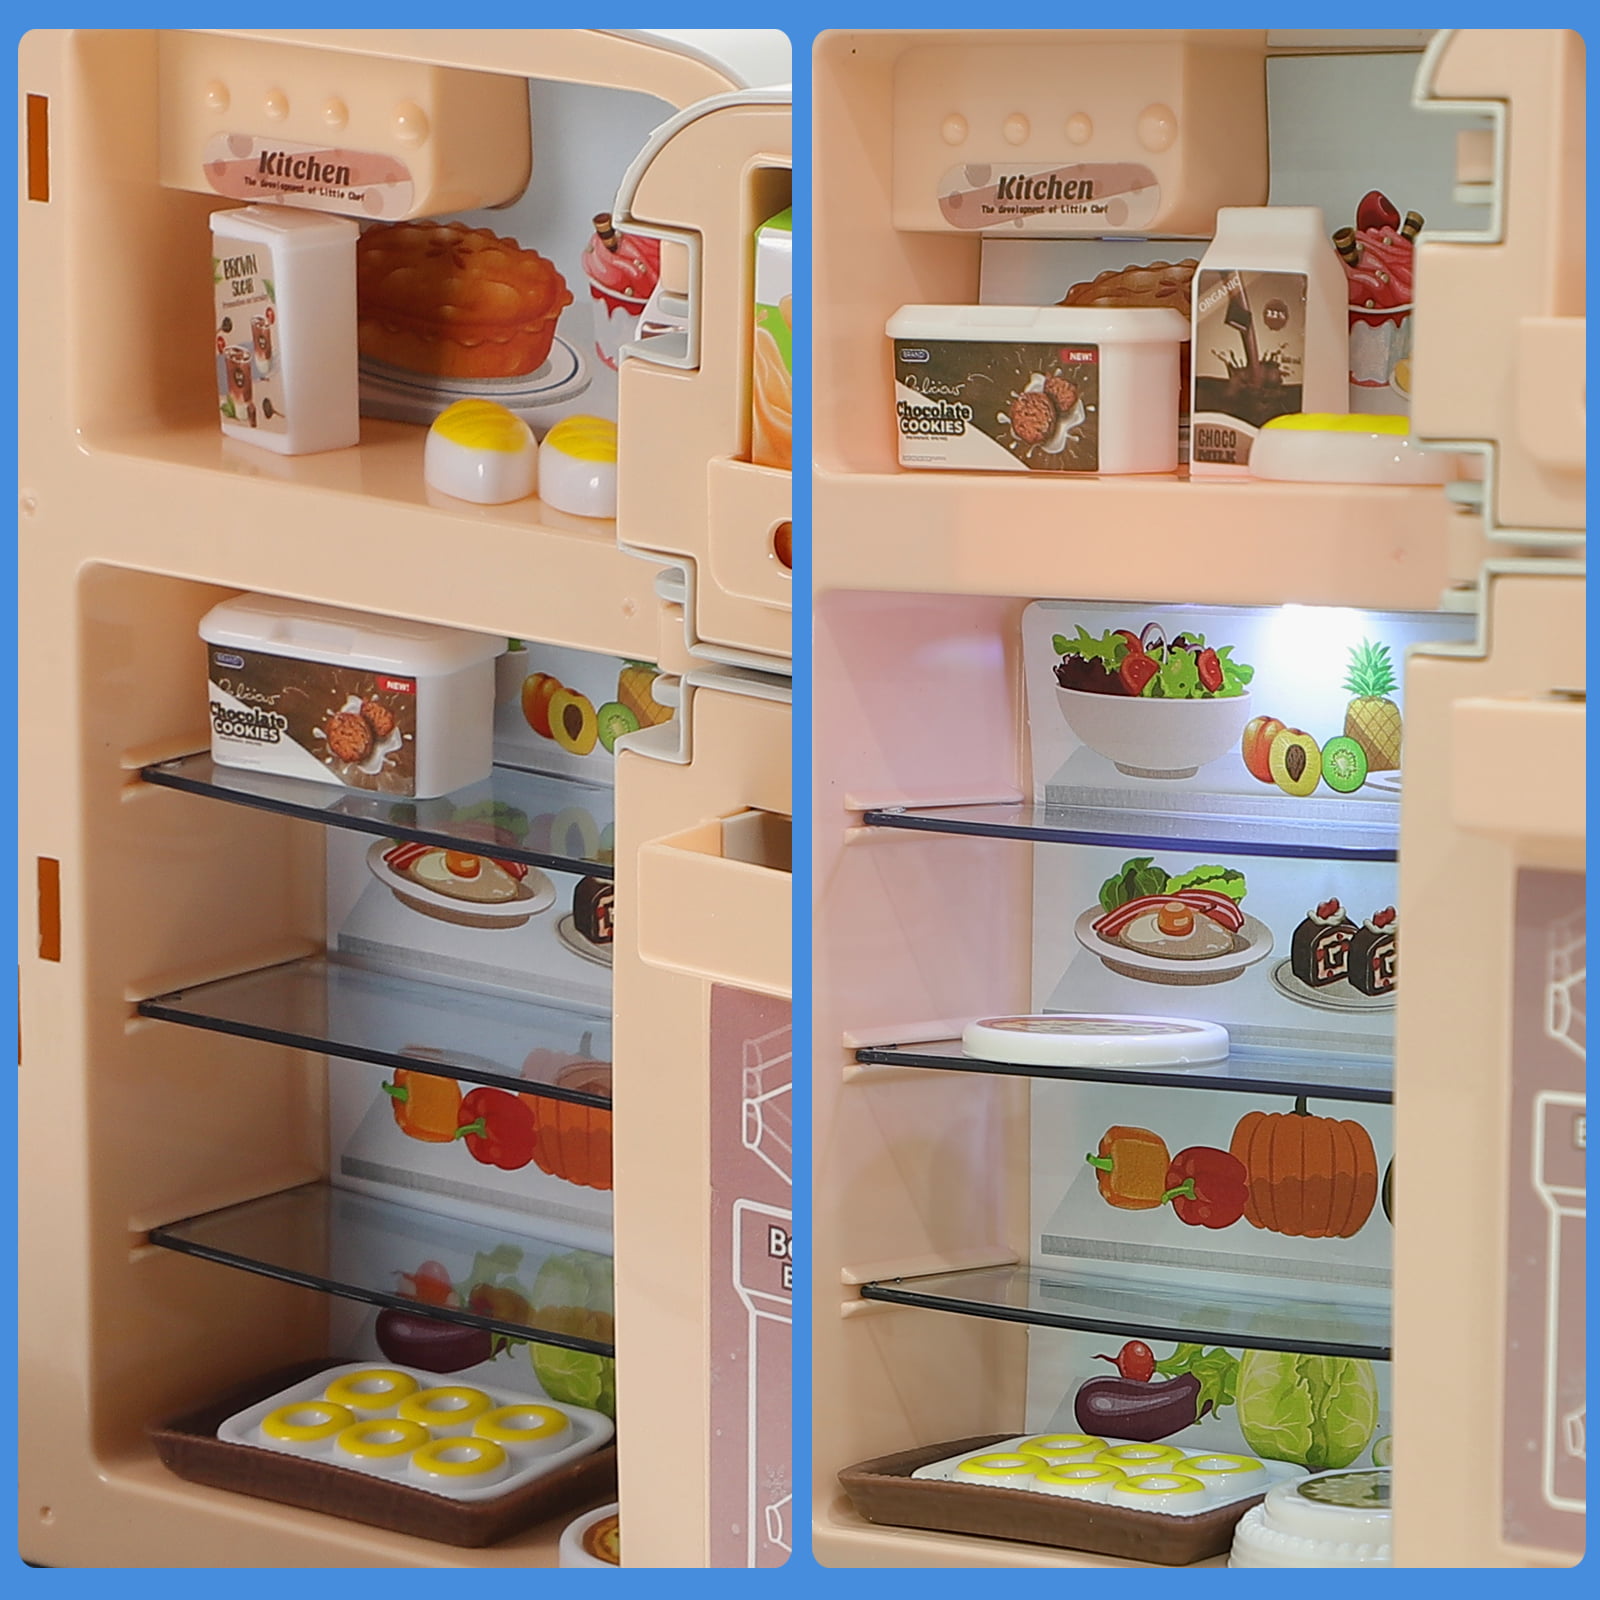 Wosune Mini Refrigerator Toy, Mini Fridge Toy, Educational